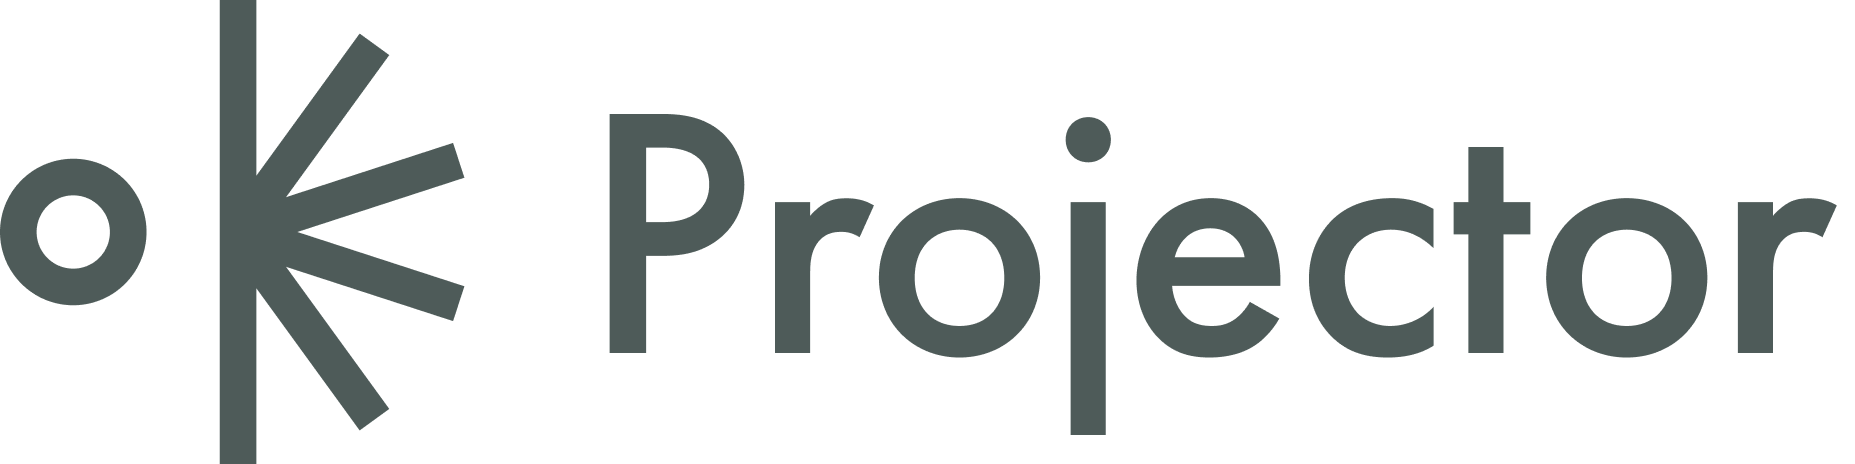 projector logo.png